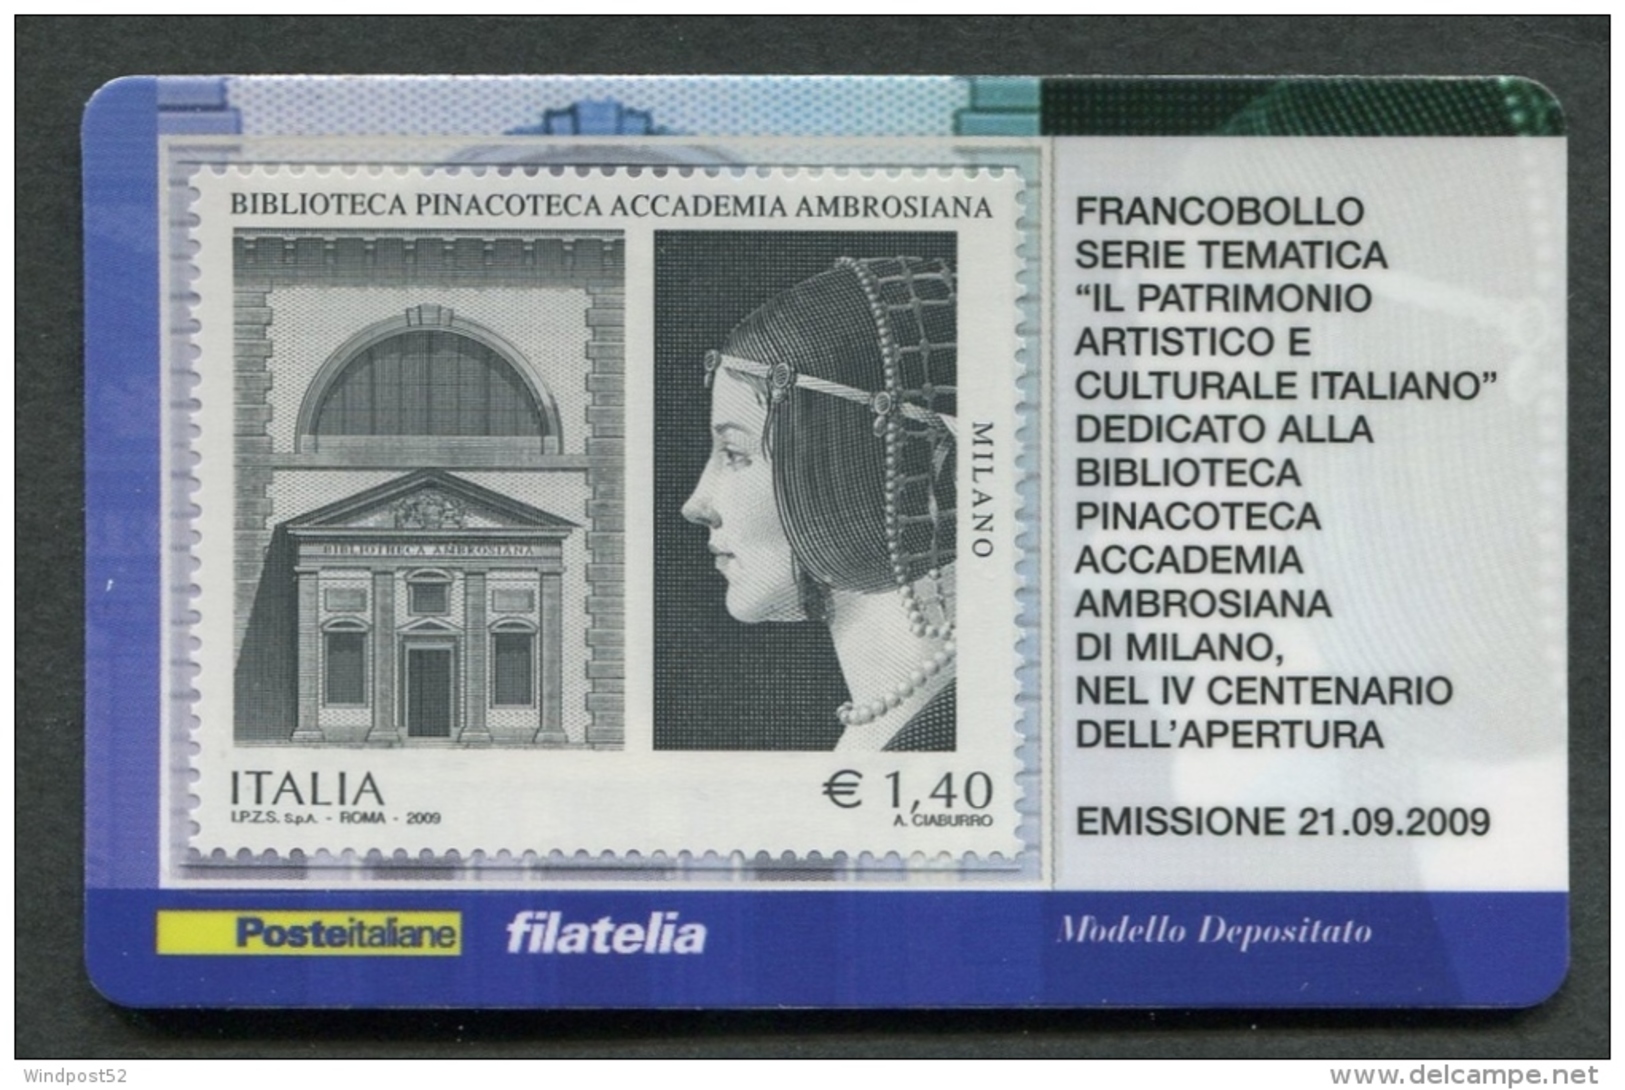 ITALIA TESSERA FILATELICA 2009 - BIBLIOTECA PINACOTECA ACCADEMIA AMBROSIANA DI MILANO - 336 - Cartes Philatéliques